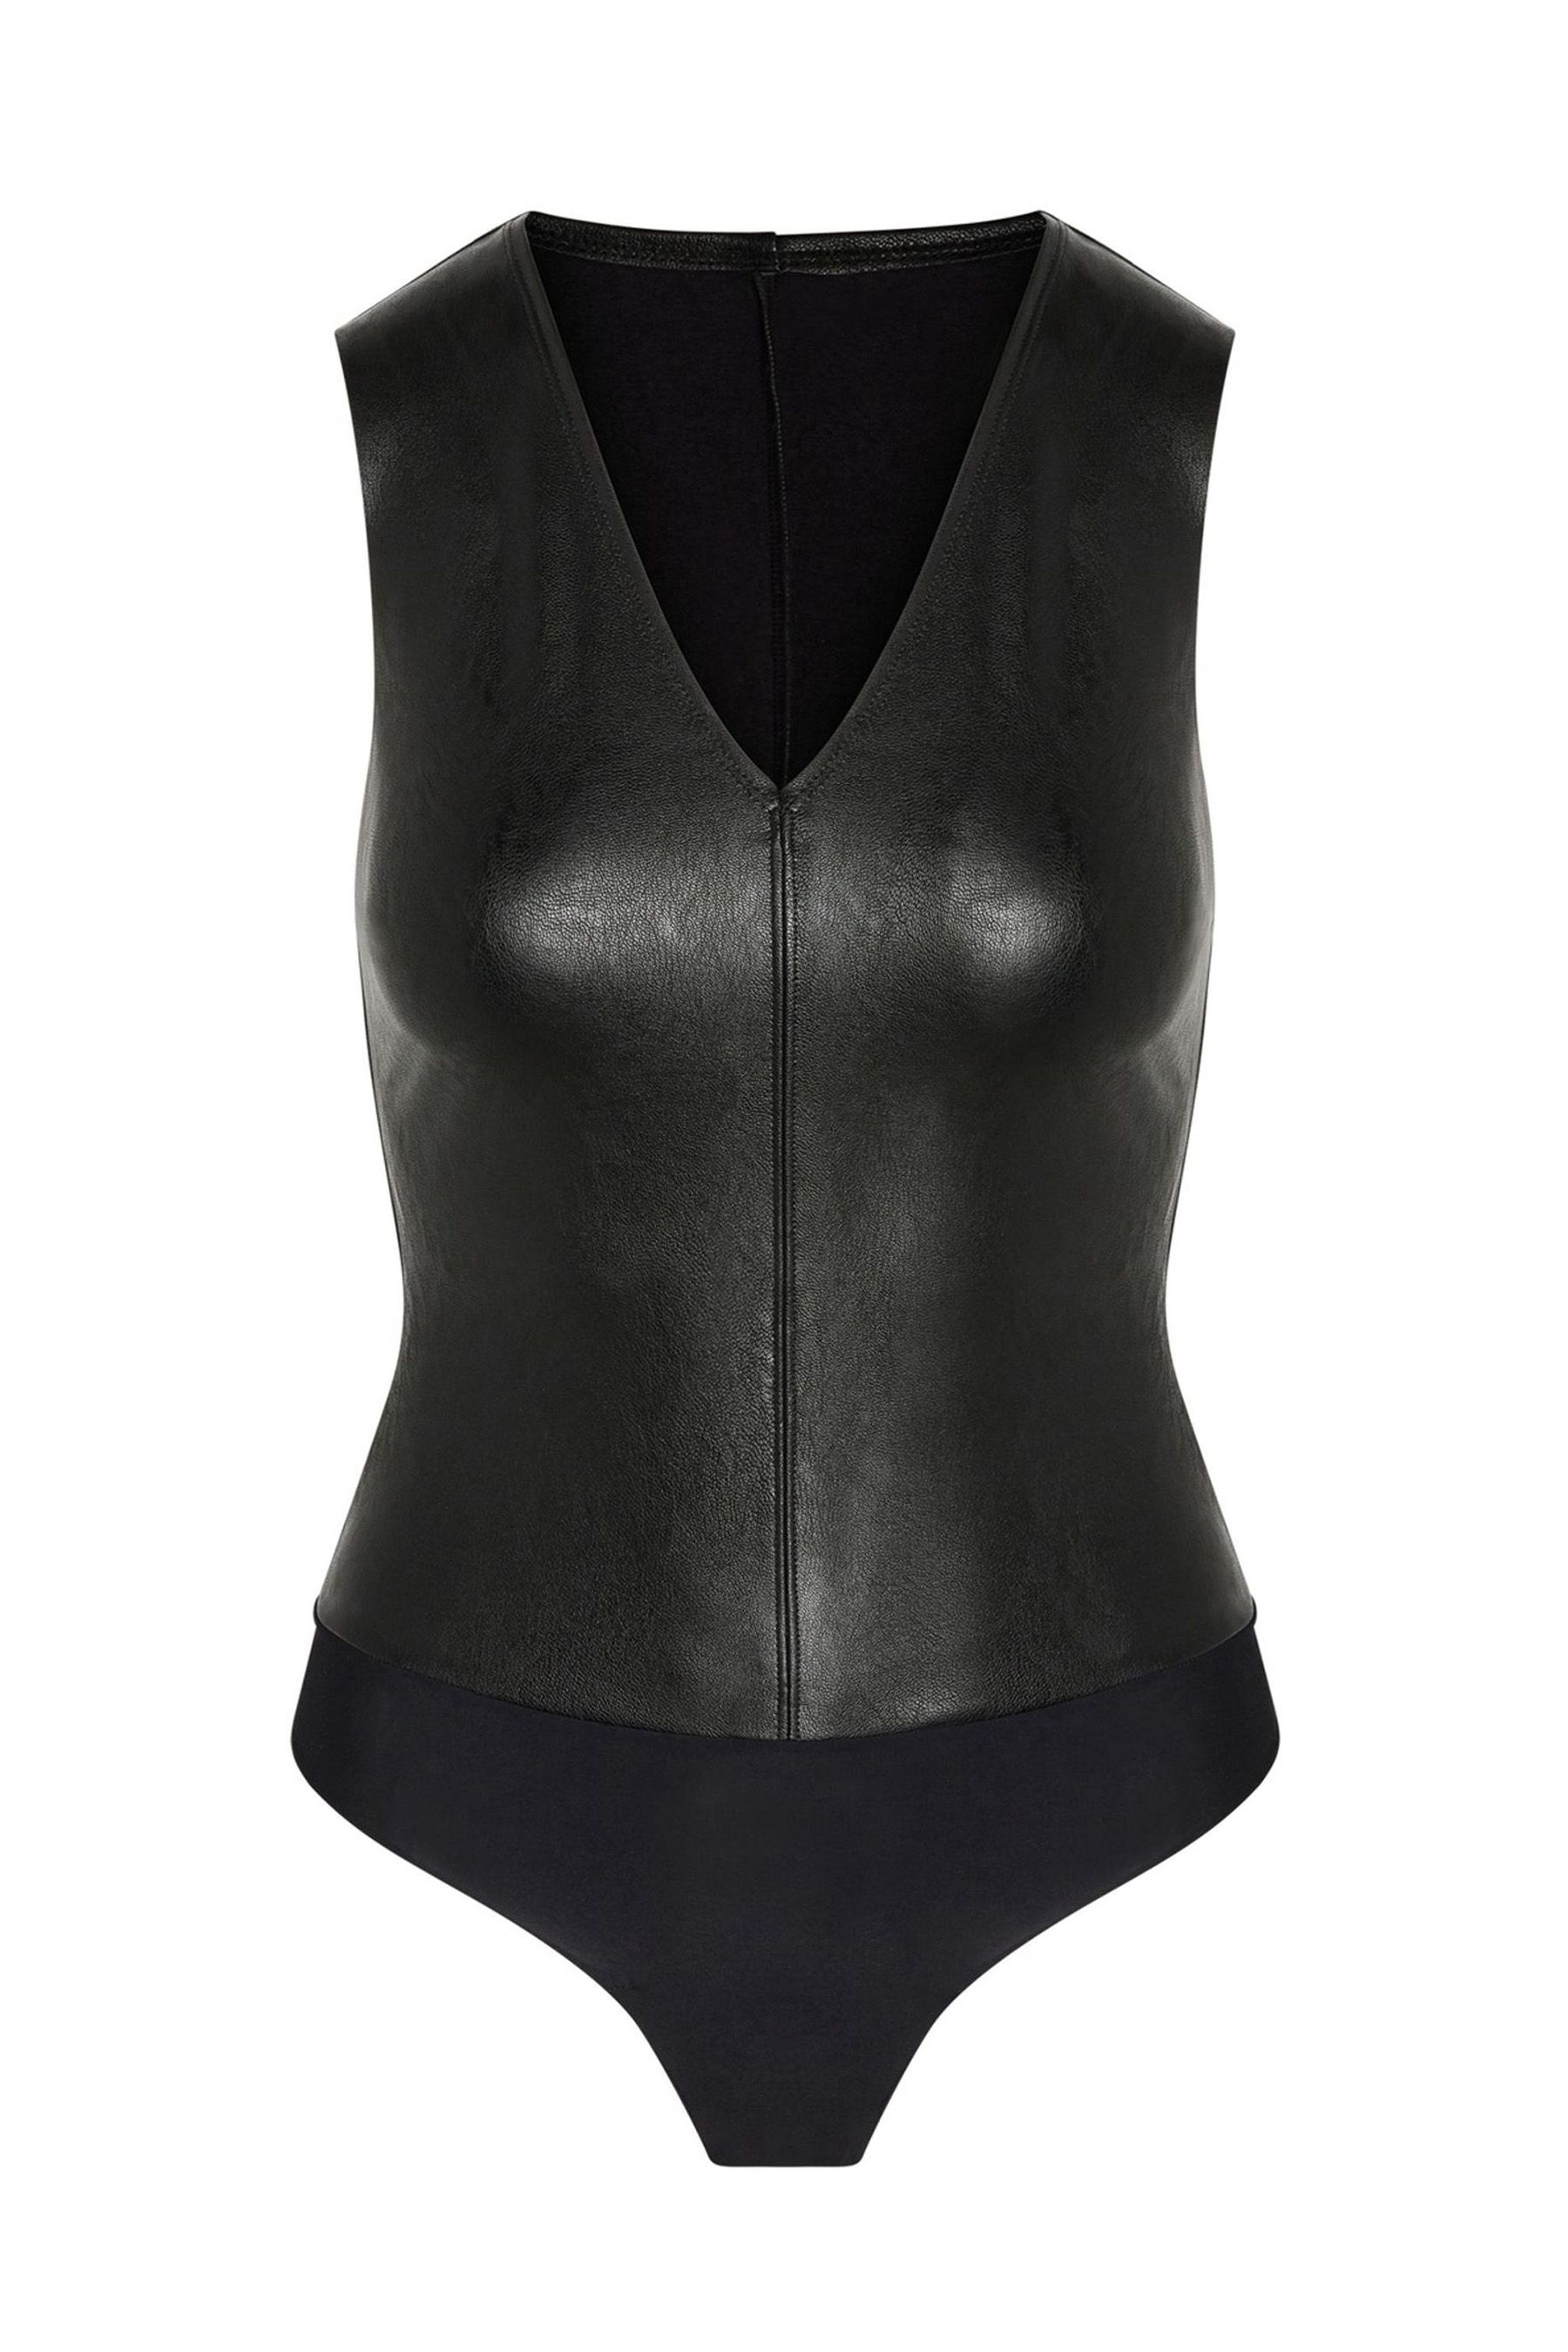 Buy Commando Black Faux Leather Bodysuit from the Next UK online shop